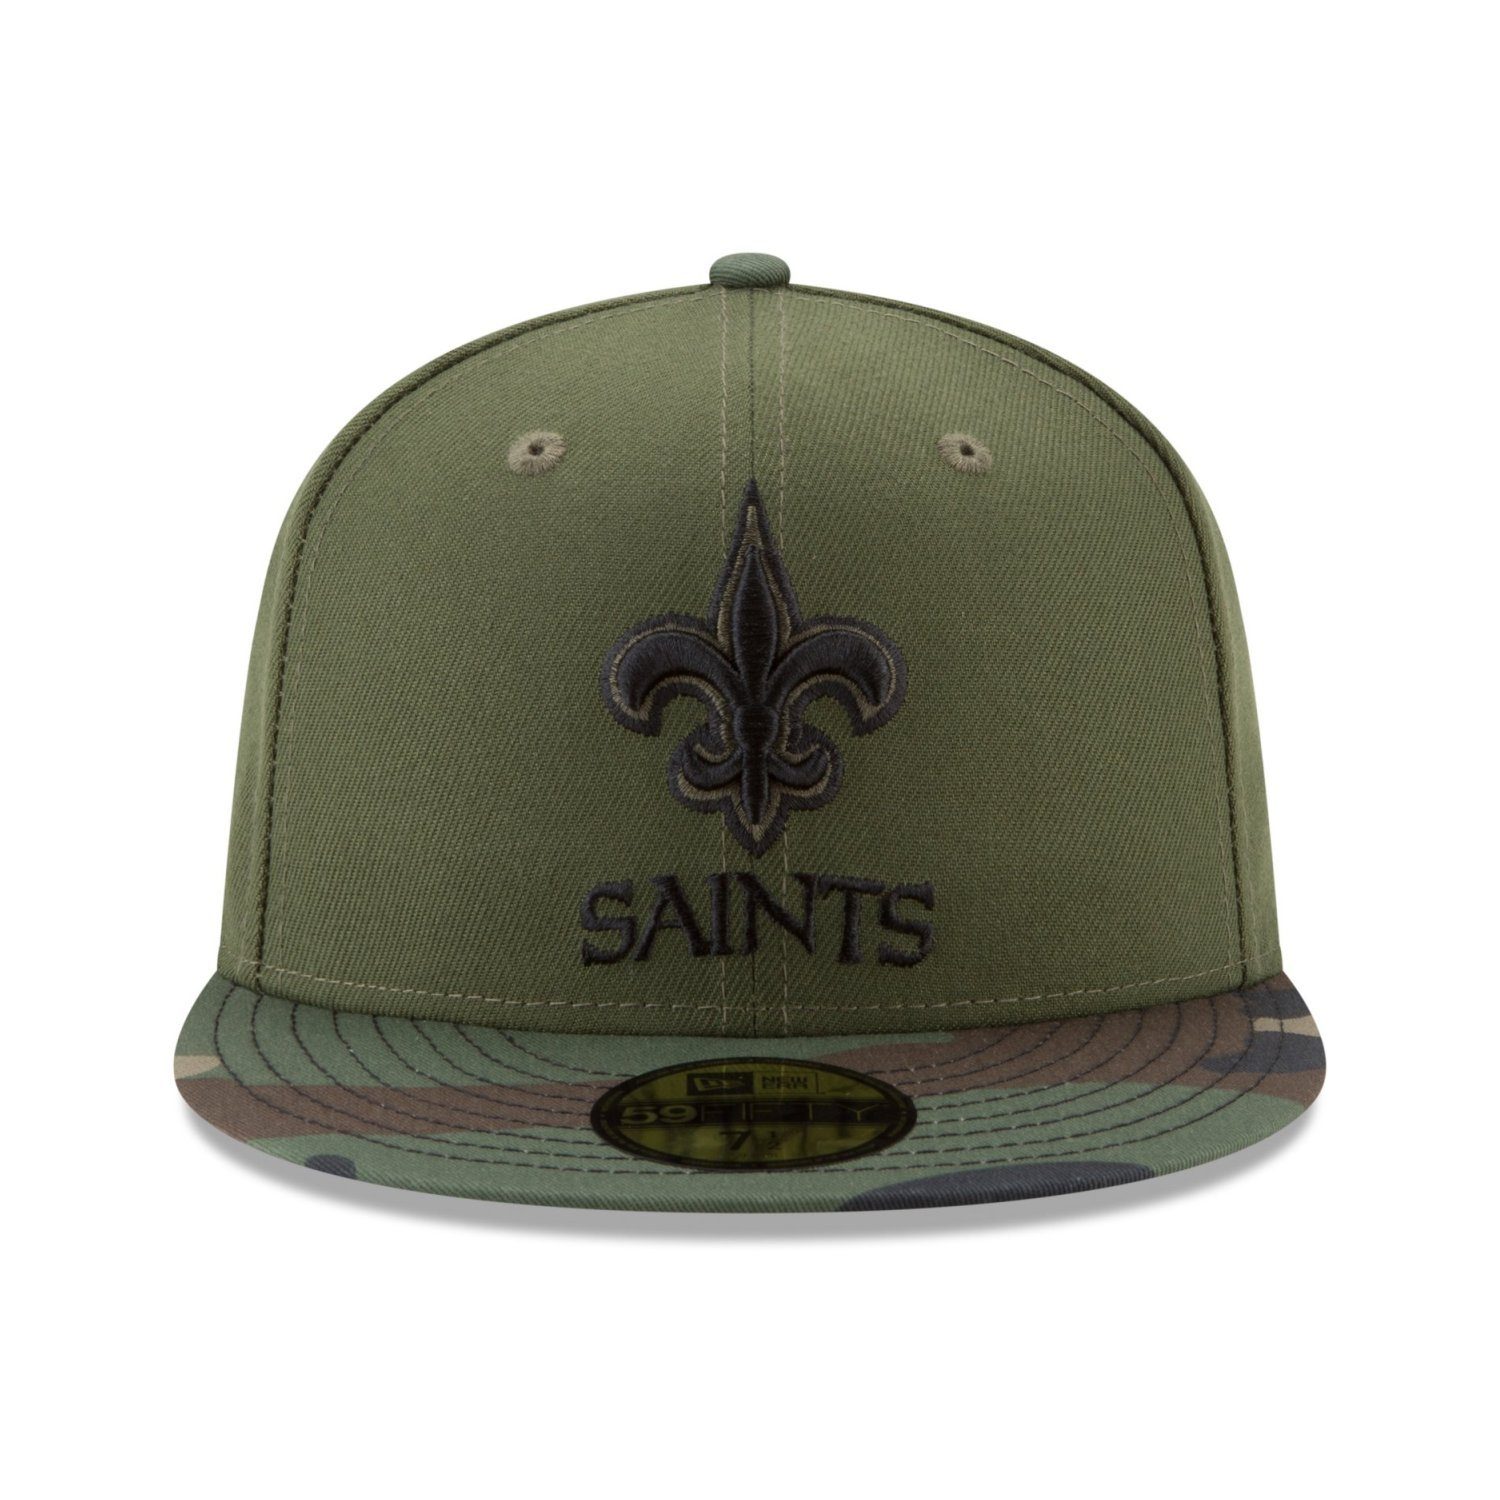 Herren Caps New Era Fitted Cap 59Fifty New Orleans Saints